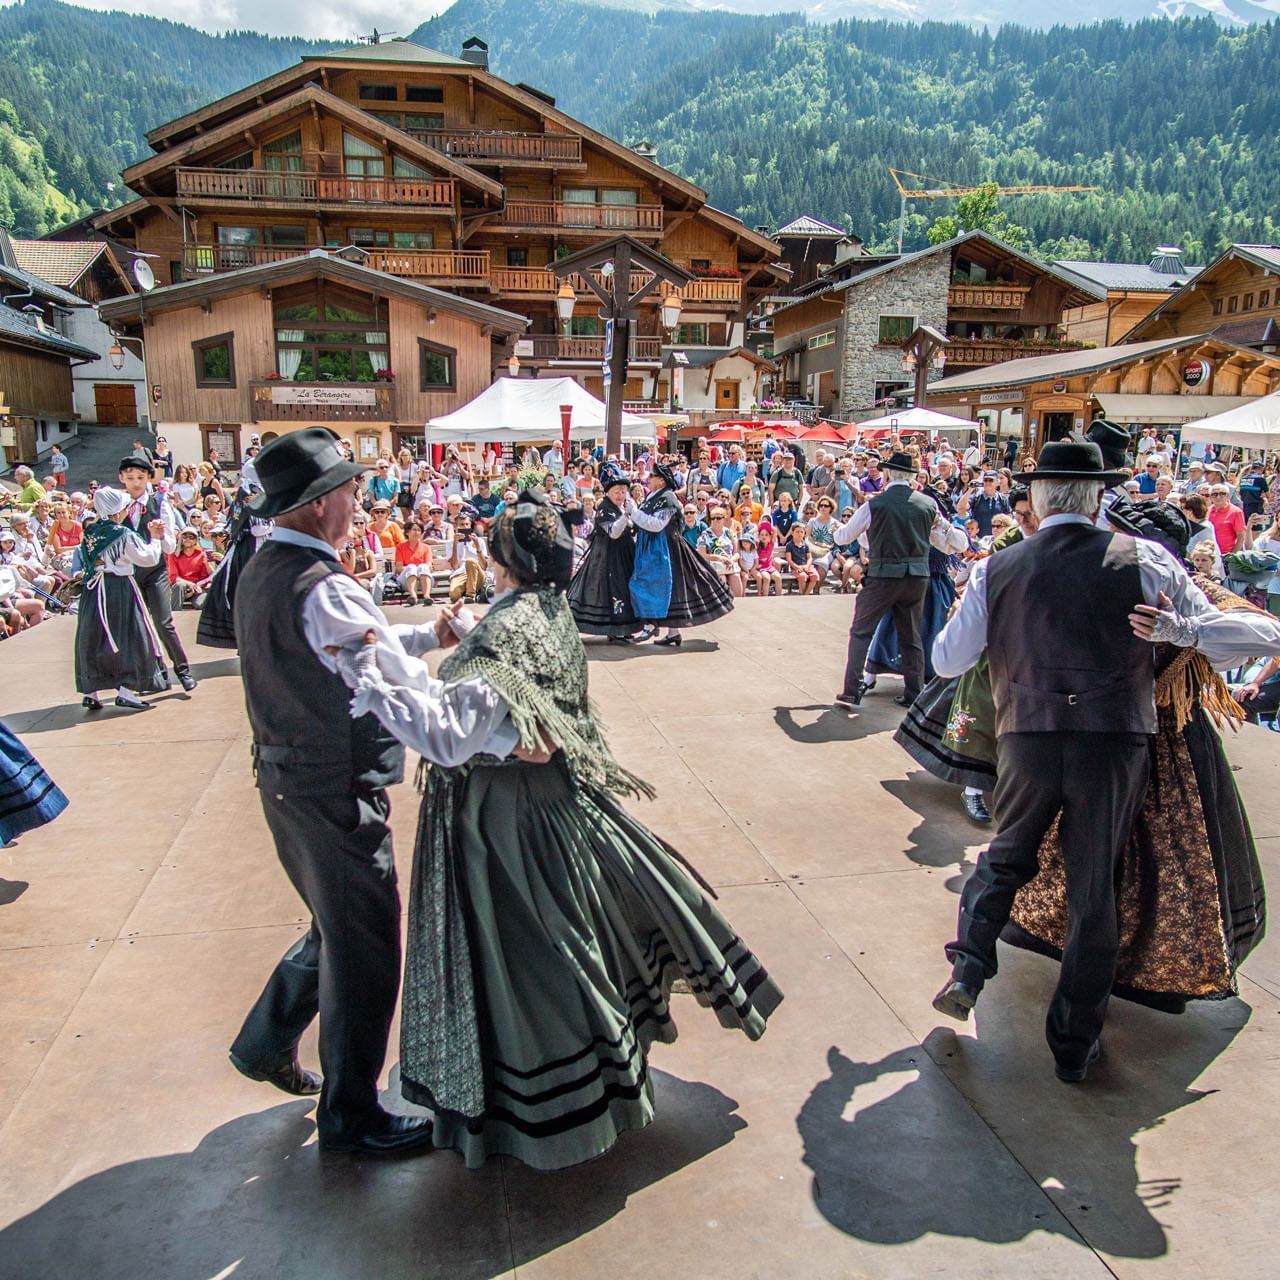 Elderly couples dancing at a village fair near Originals Hotels